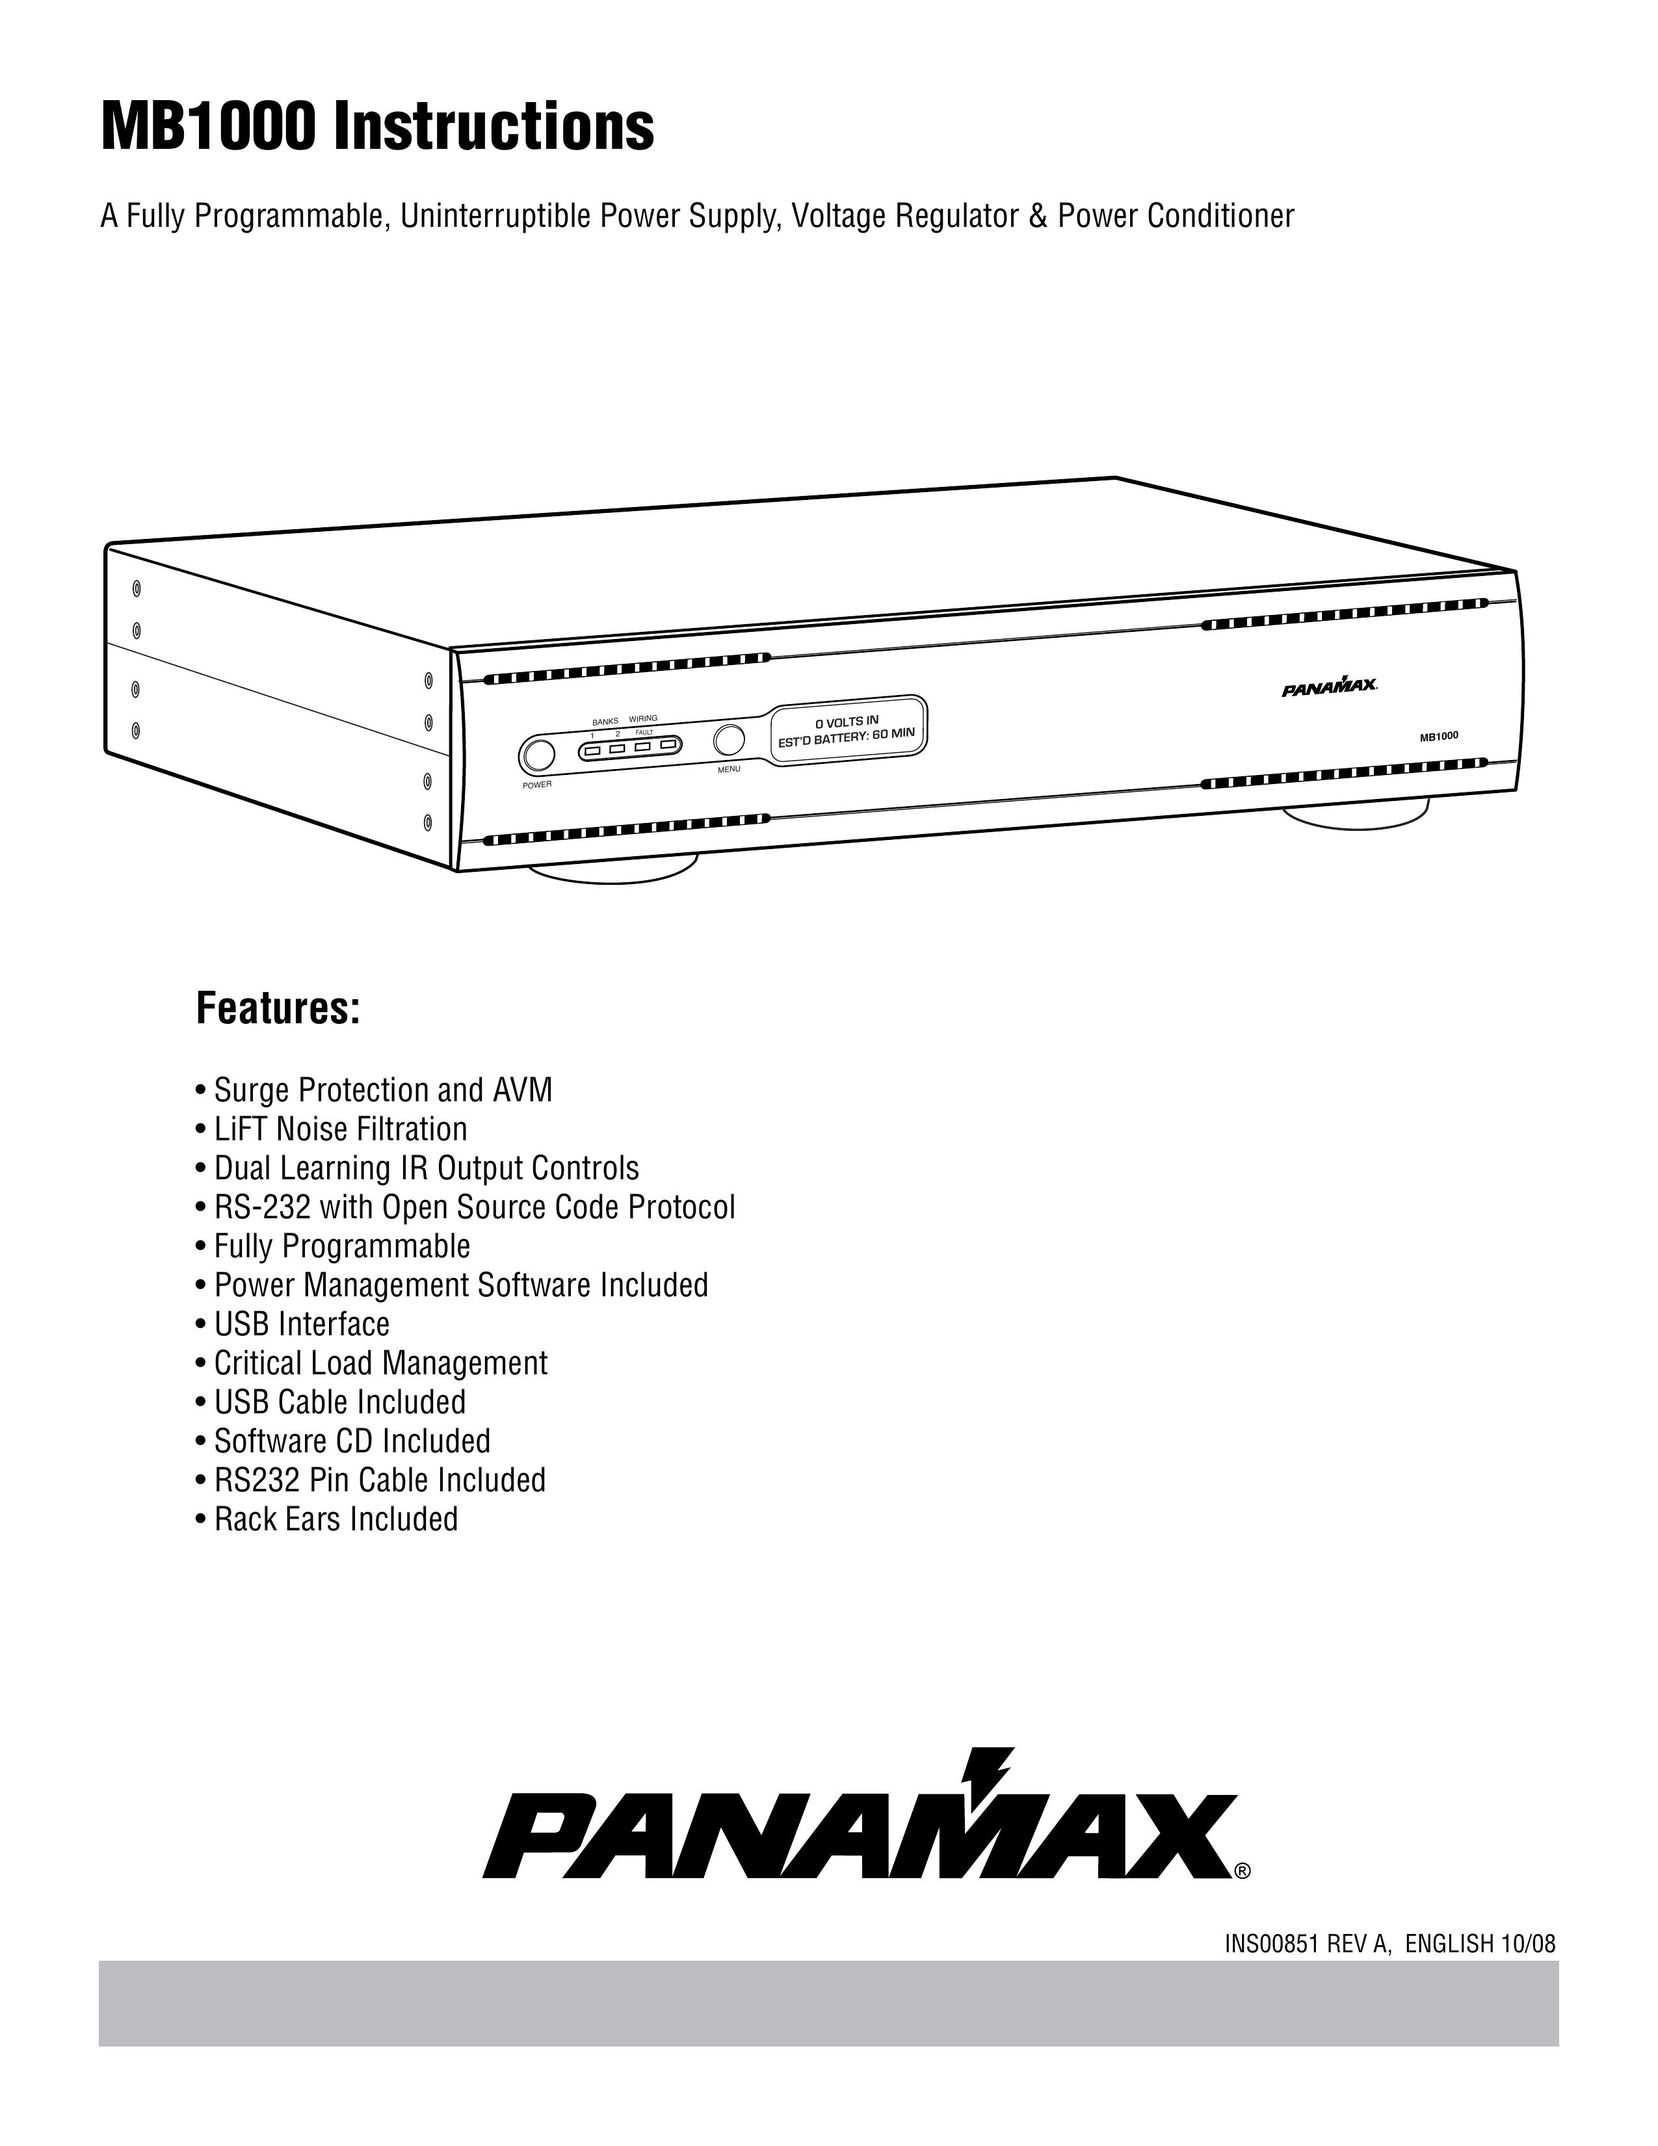 Panamax MB1000 Power Supply User Manual